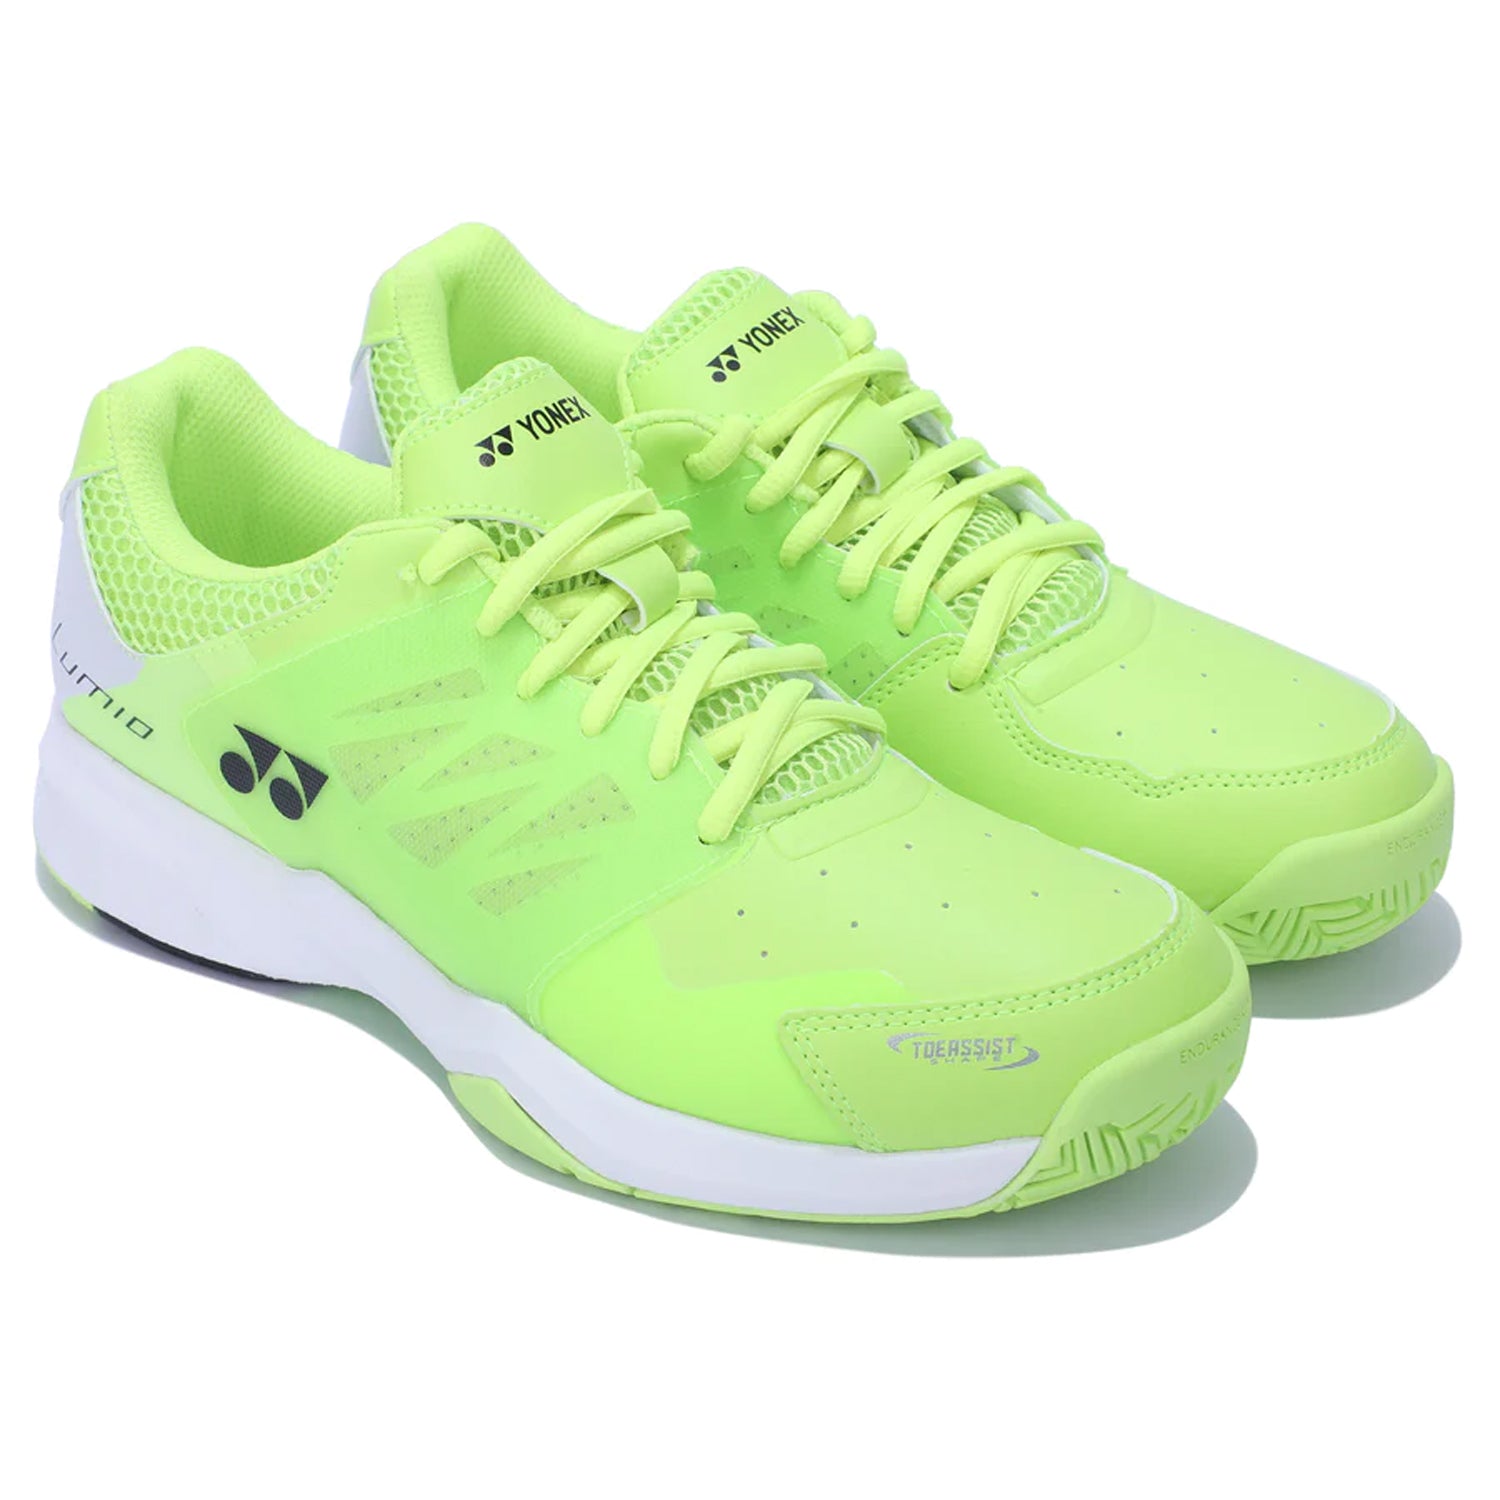 Yonex Lumio 3 Power Cushion Junior Tennis Shoes - Best Price online Prokicksports.com